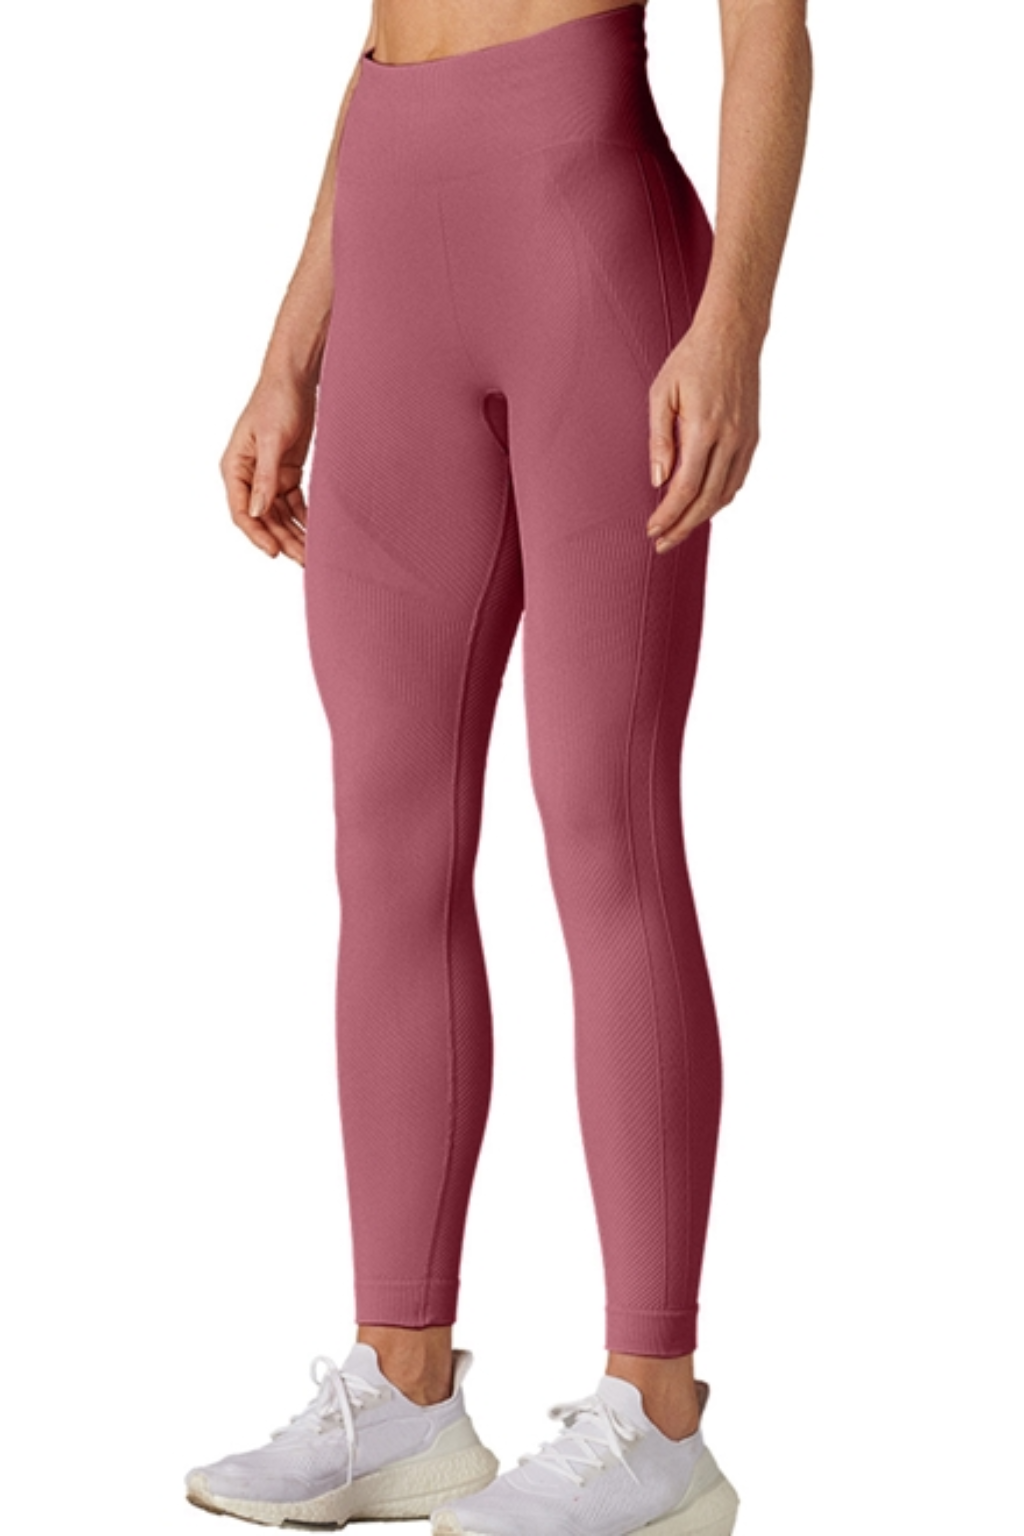 Legging Reebok Pants Fw1 Rosa - Compre Agora